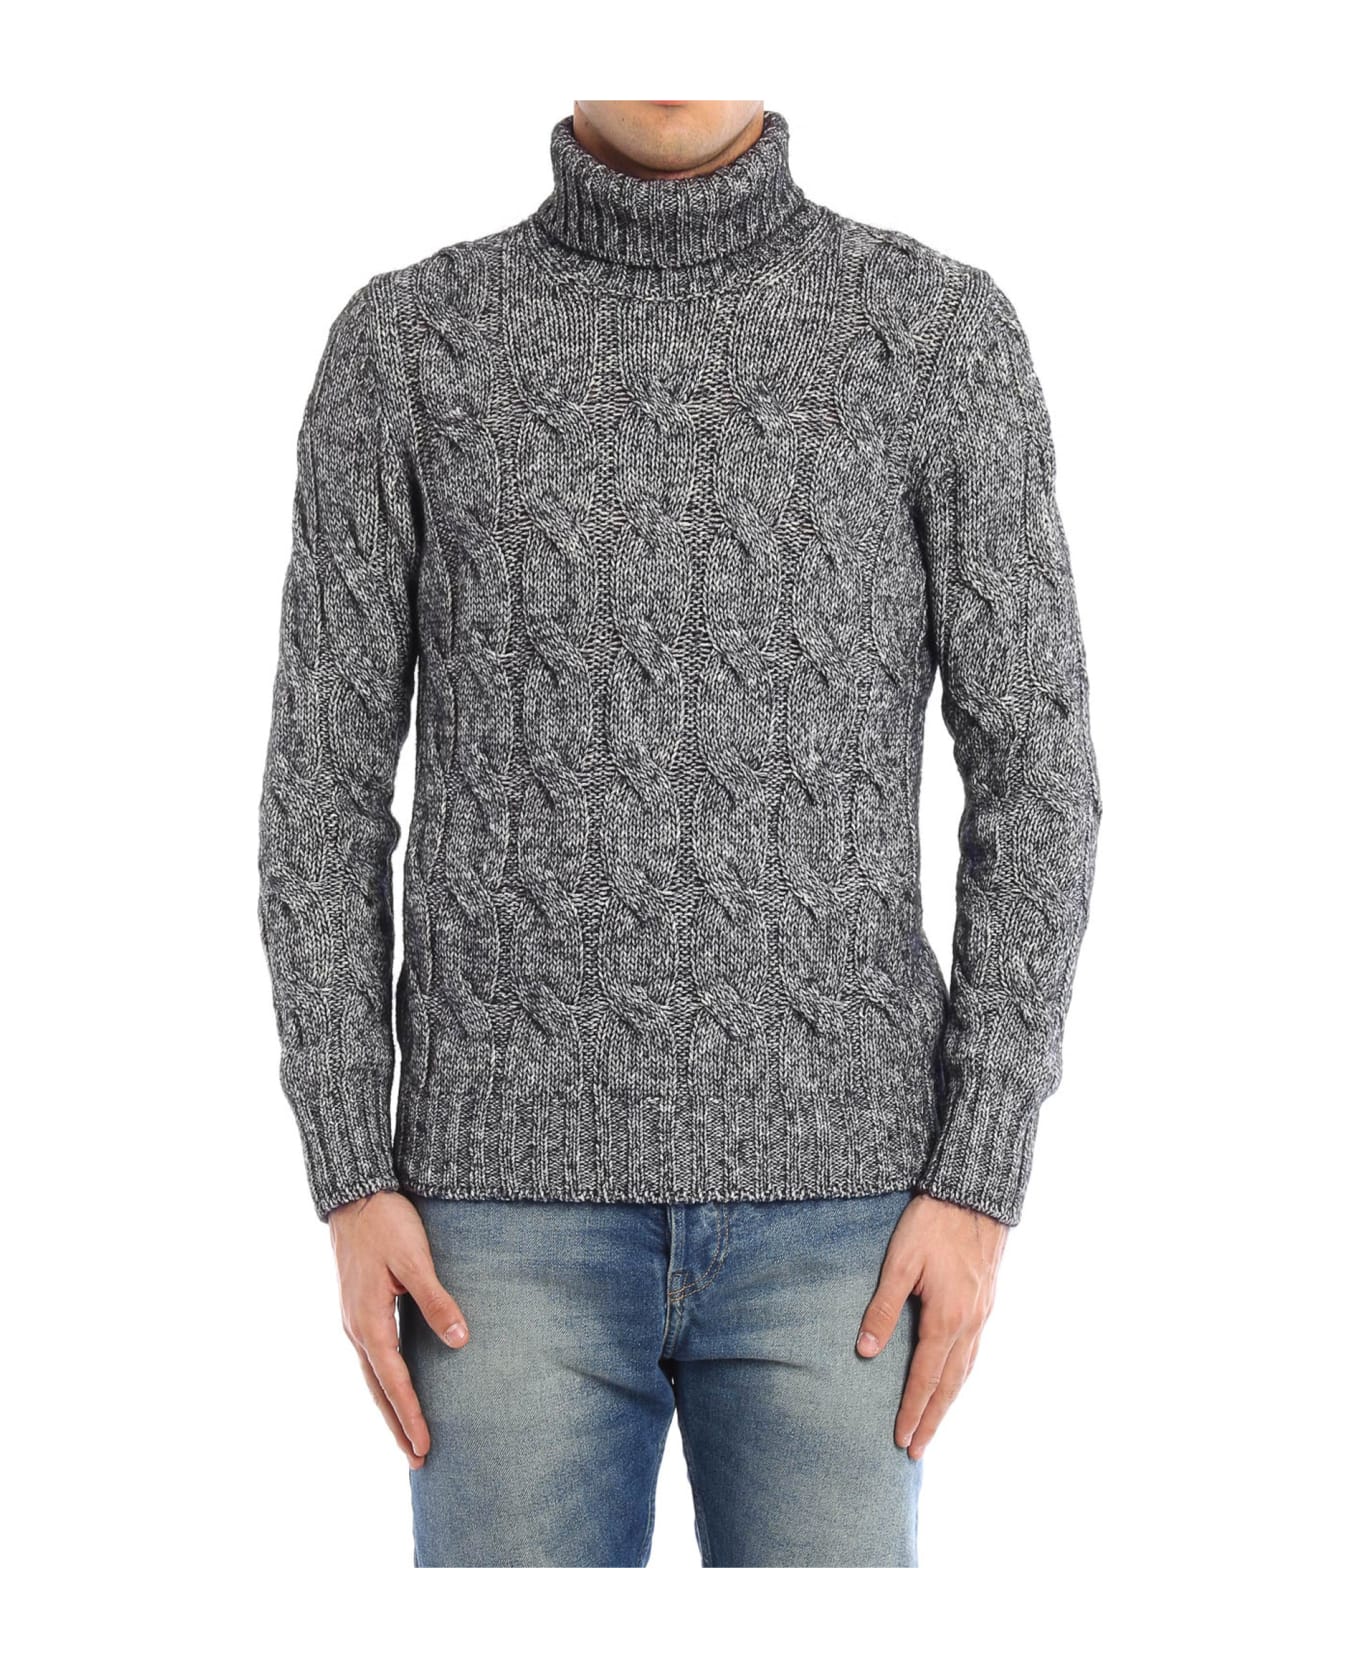 Saint Laurent Turtleneck Sweater - Silver ニットウェア